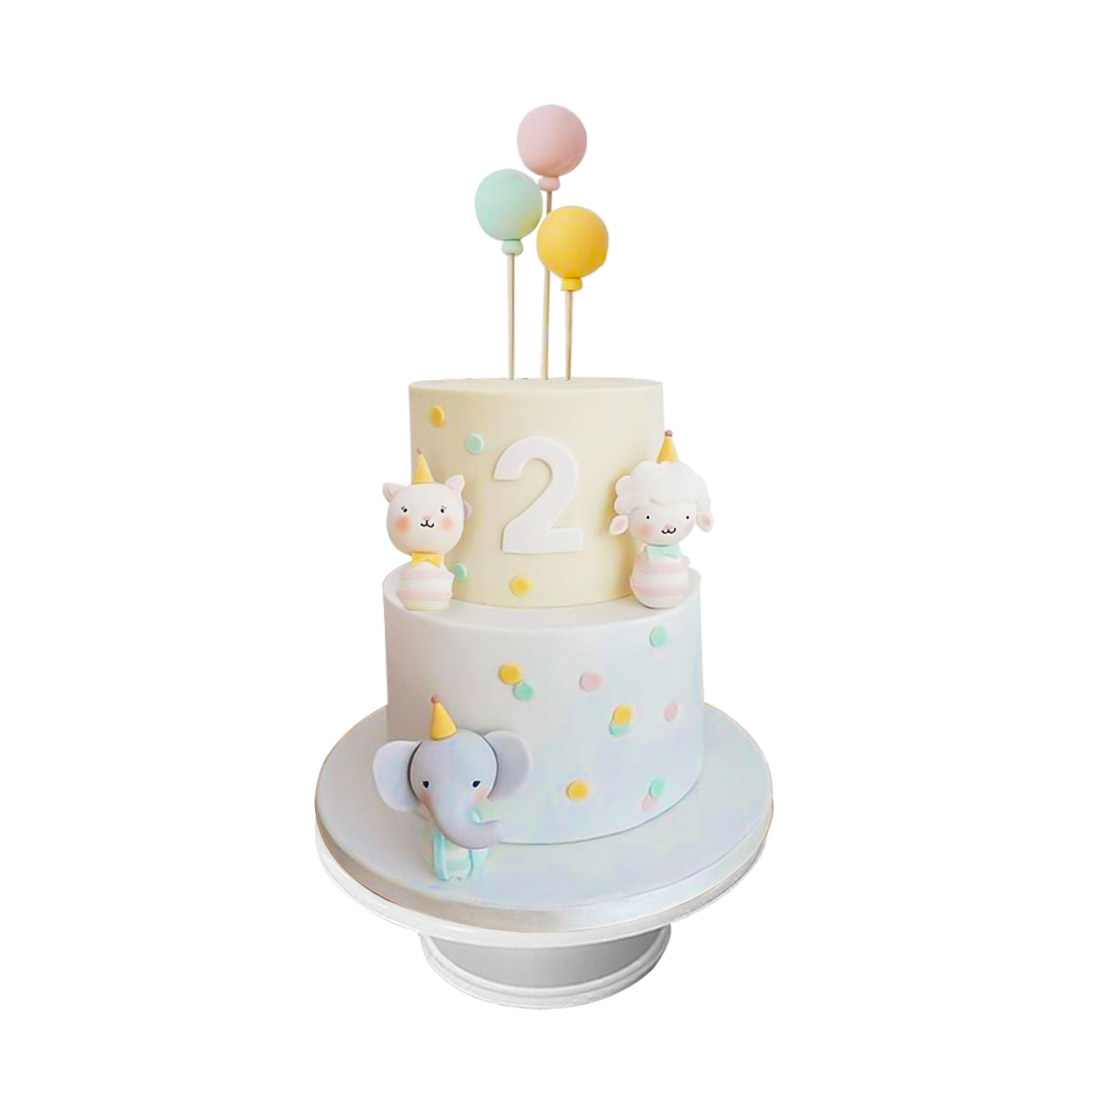 Pastel de animalitos para cumpleaños infantil